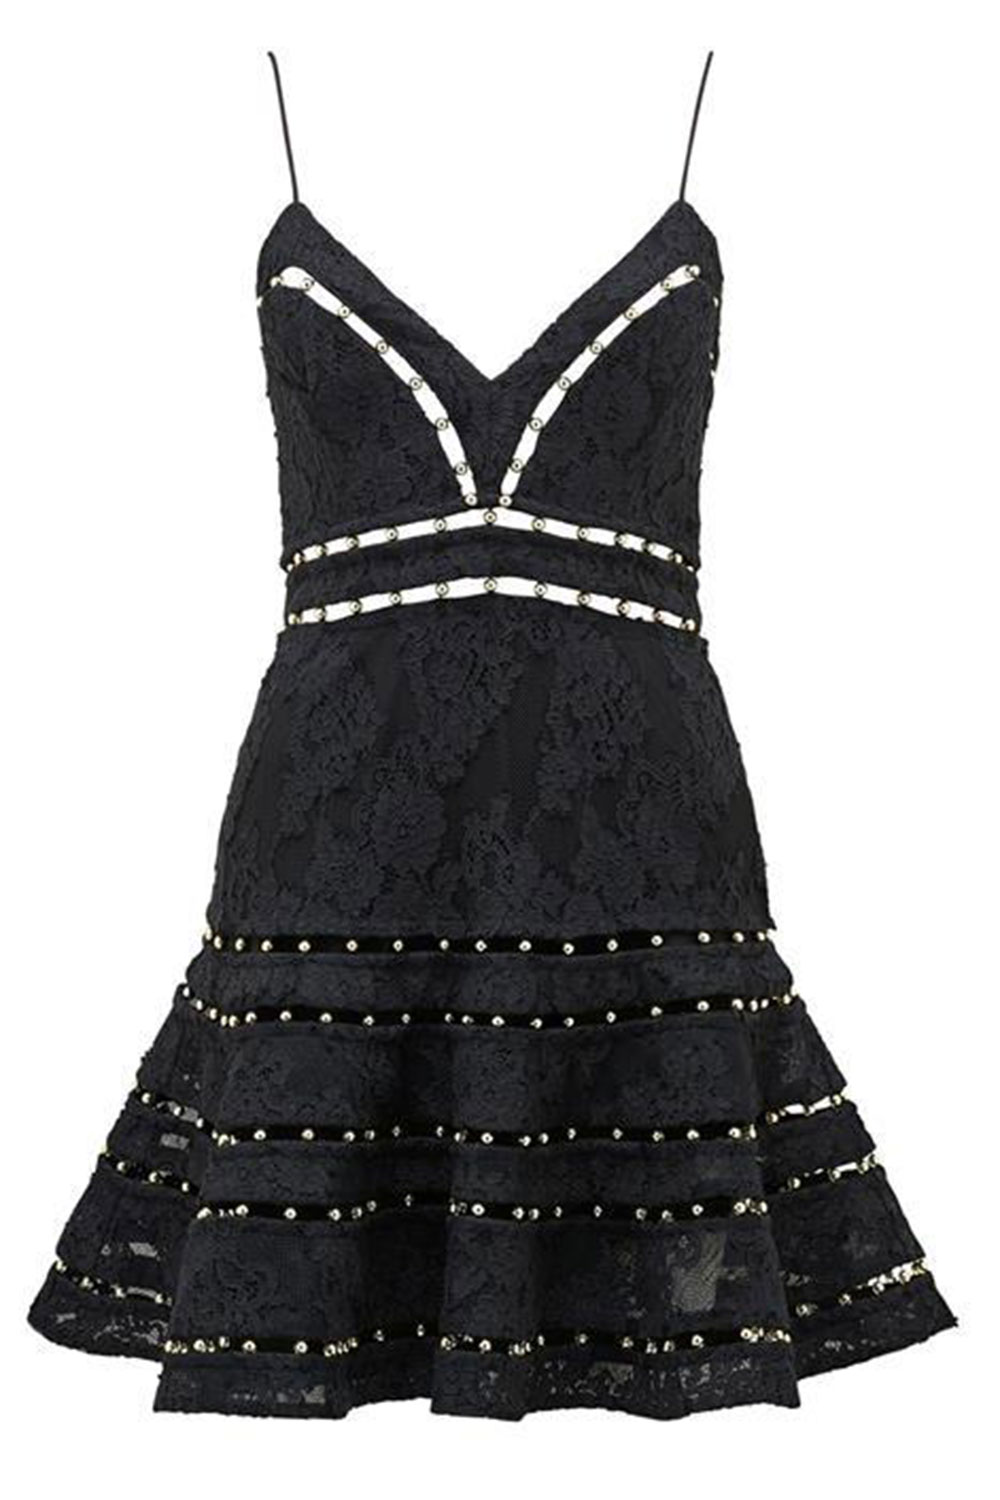 Thurley Formentera Mini Dress, $899; at thurley.com.au